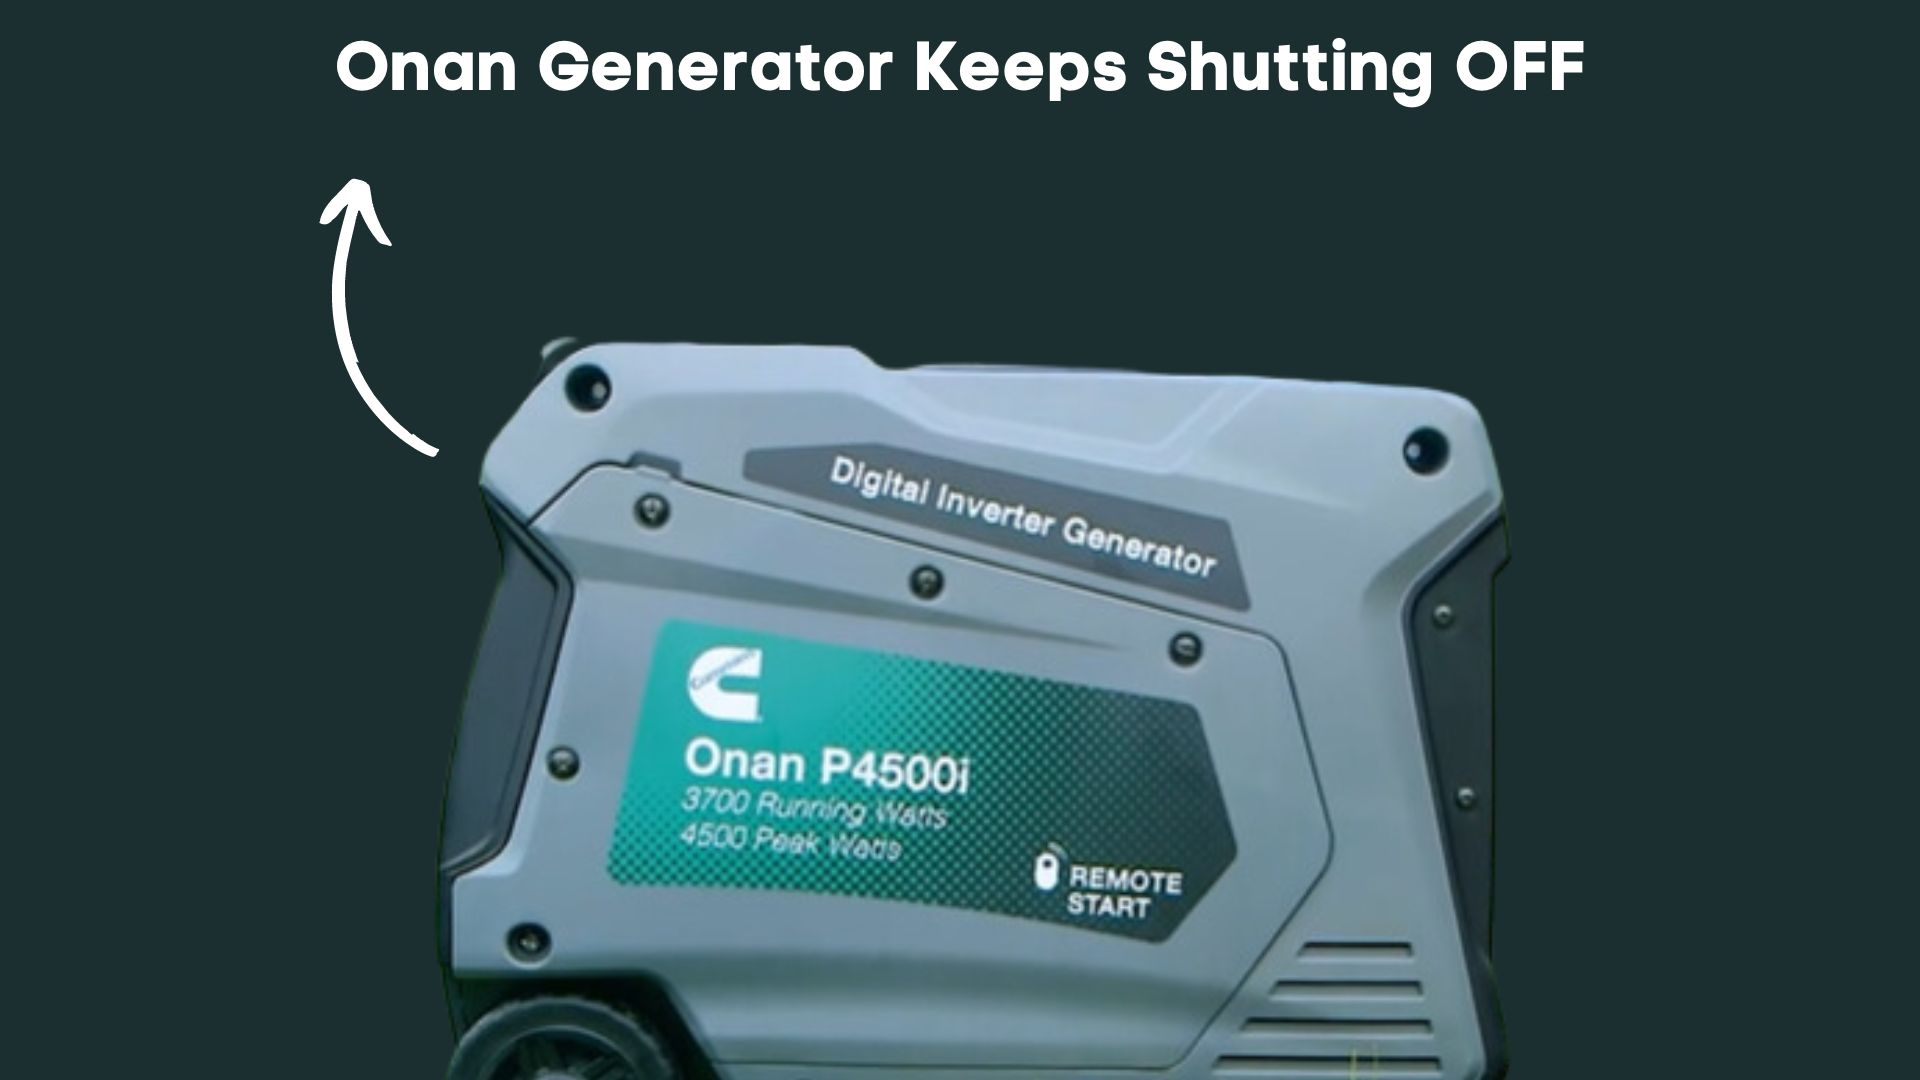 onan generator keeps shutting off